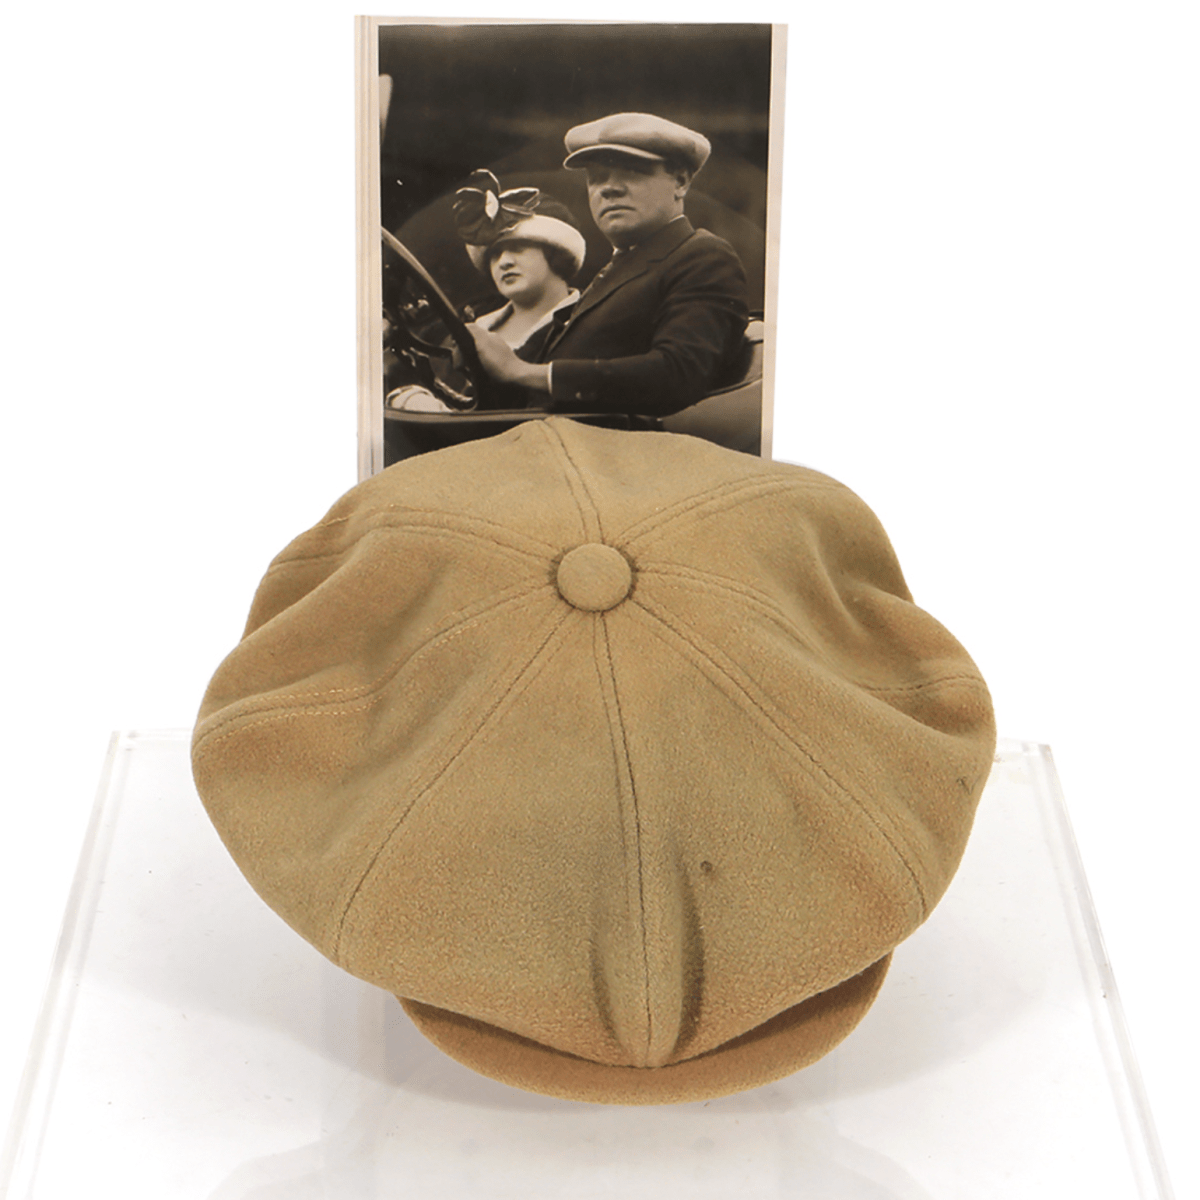 Babe Ruth Preferred Buttons On His Uniforms — Todd Radom Design